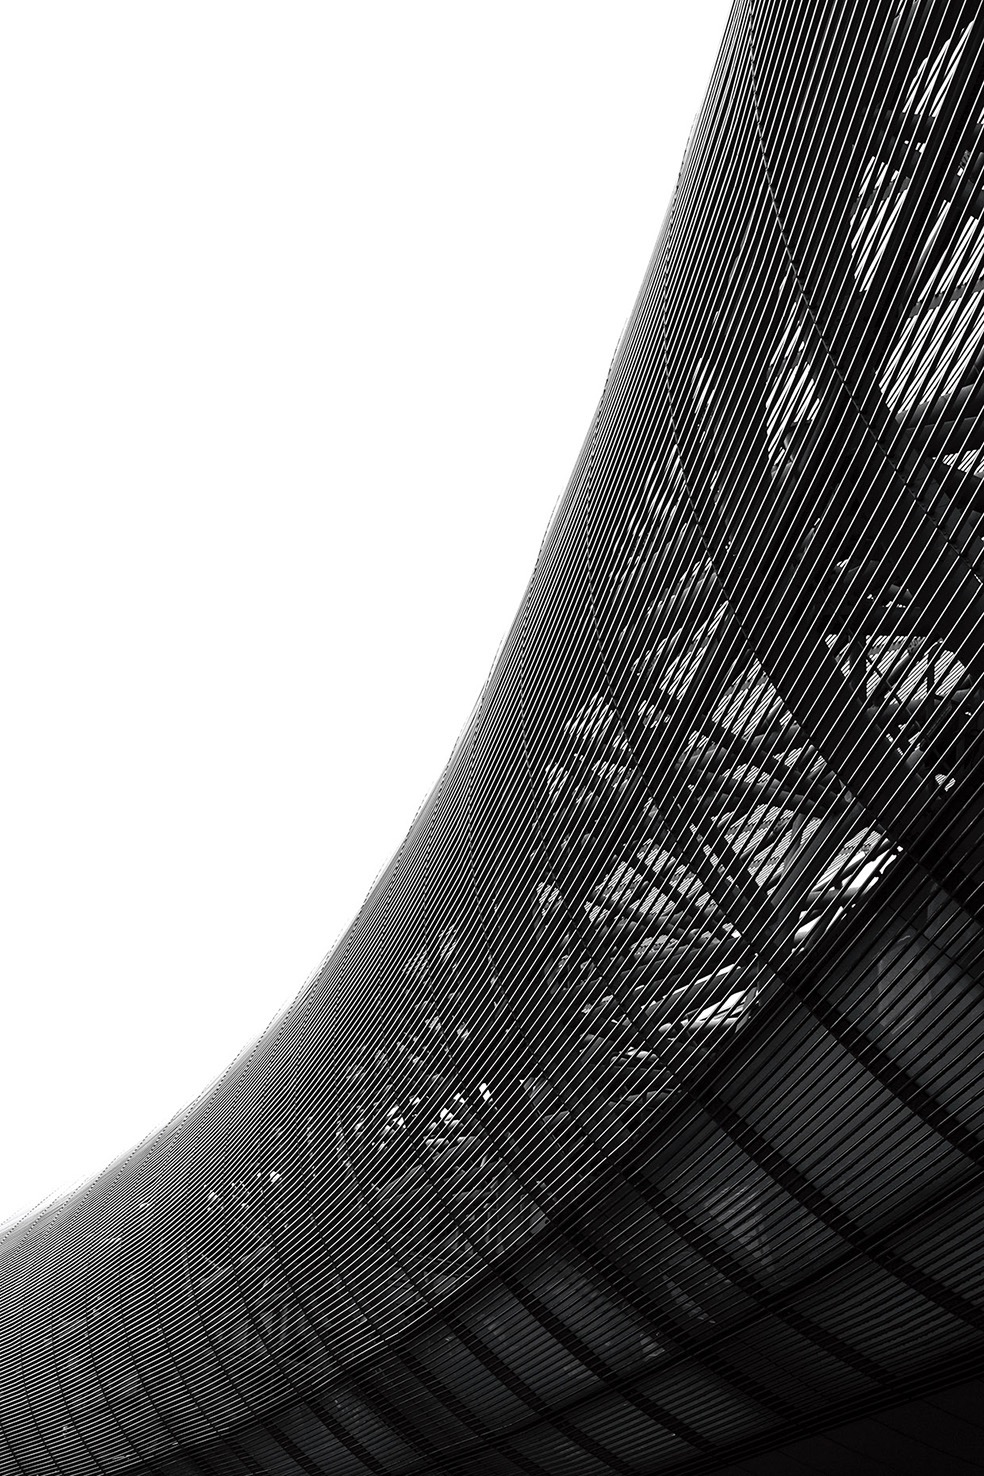 kevin_krautgartner-black_and_white-architecture_photography-photogrvphy_magazine_03